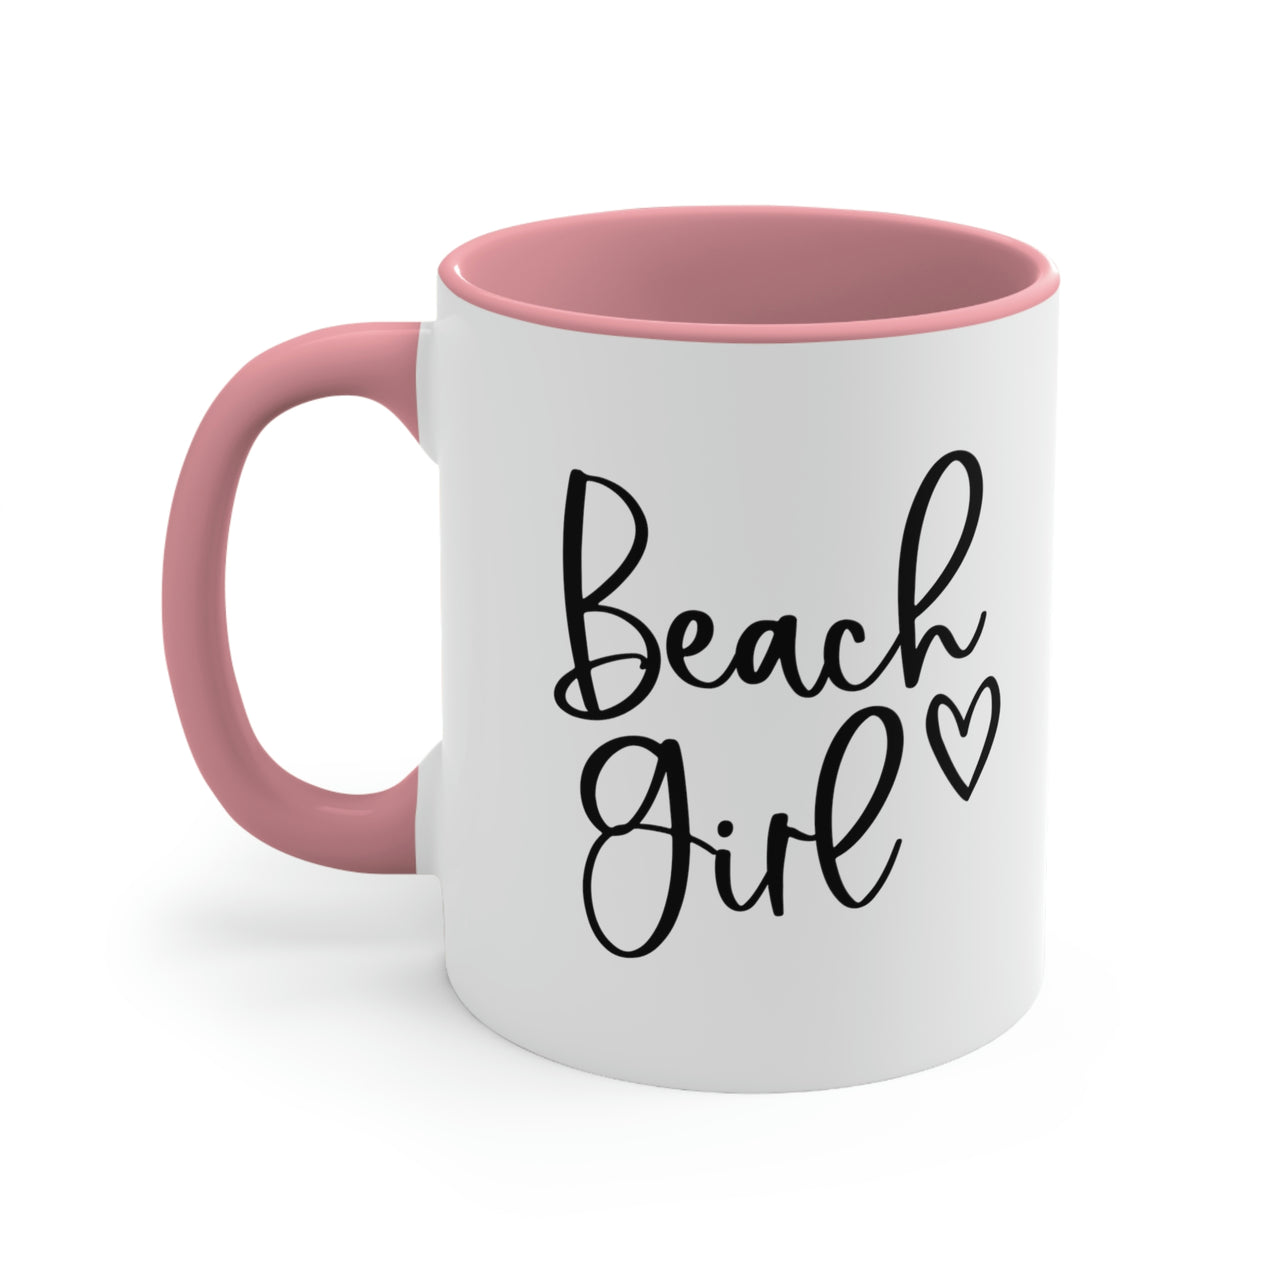 Beach Girl Ceramic Coffee Mug, 5 Colors Mugs New England Trading Co Pink  